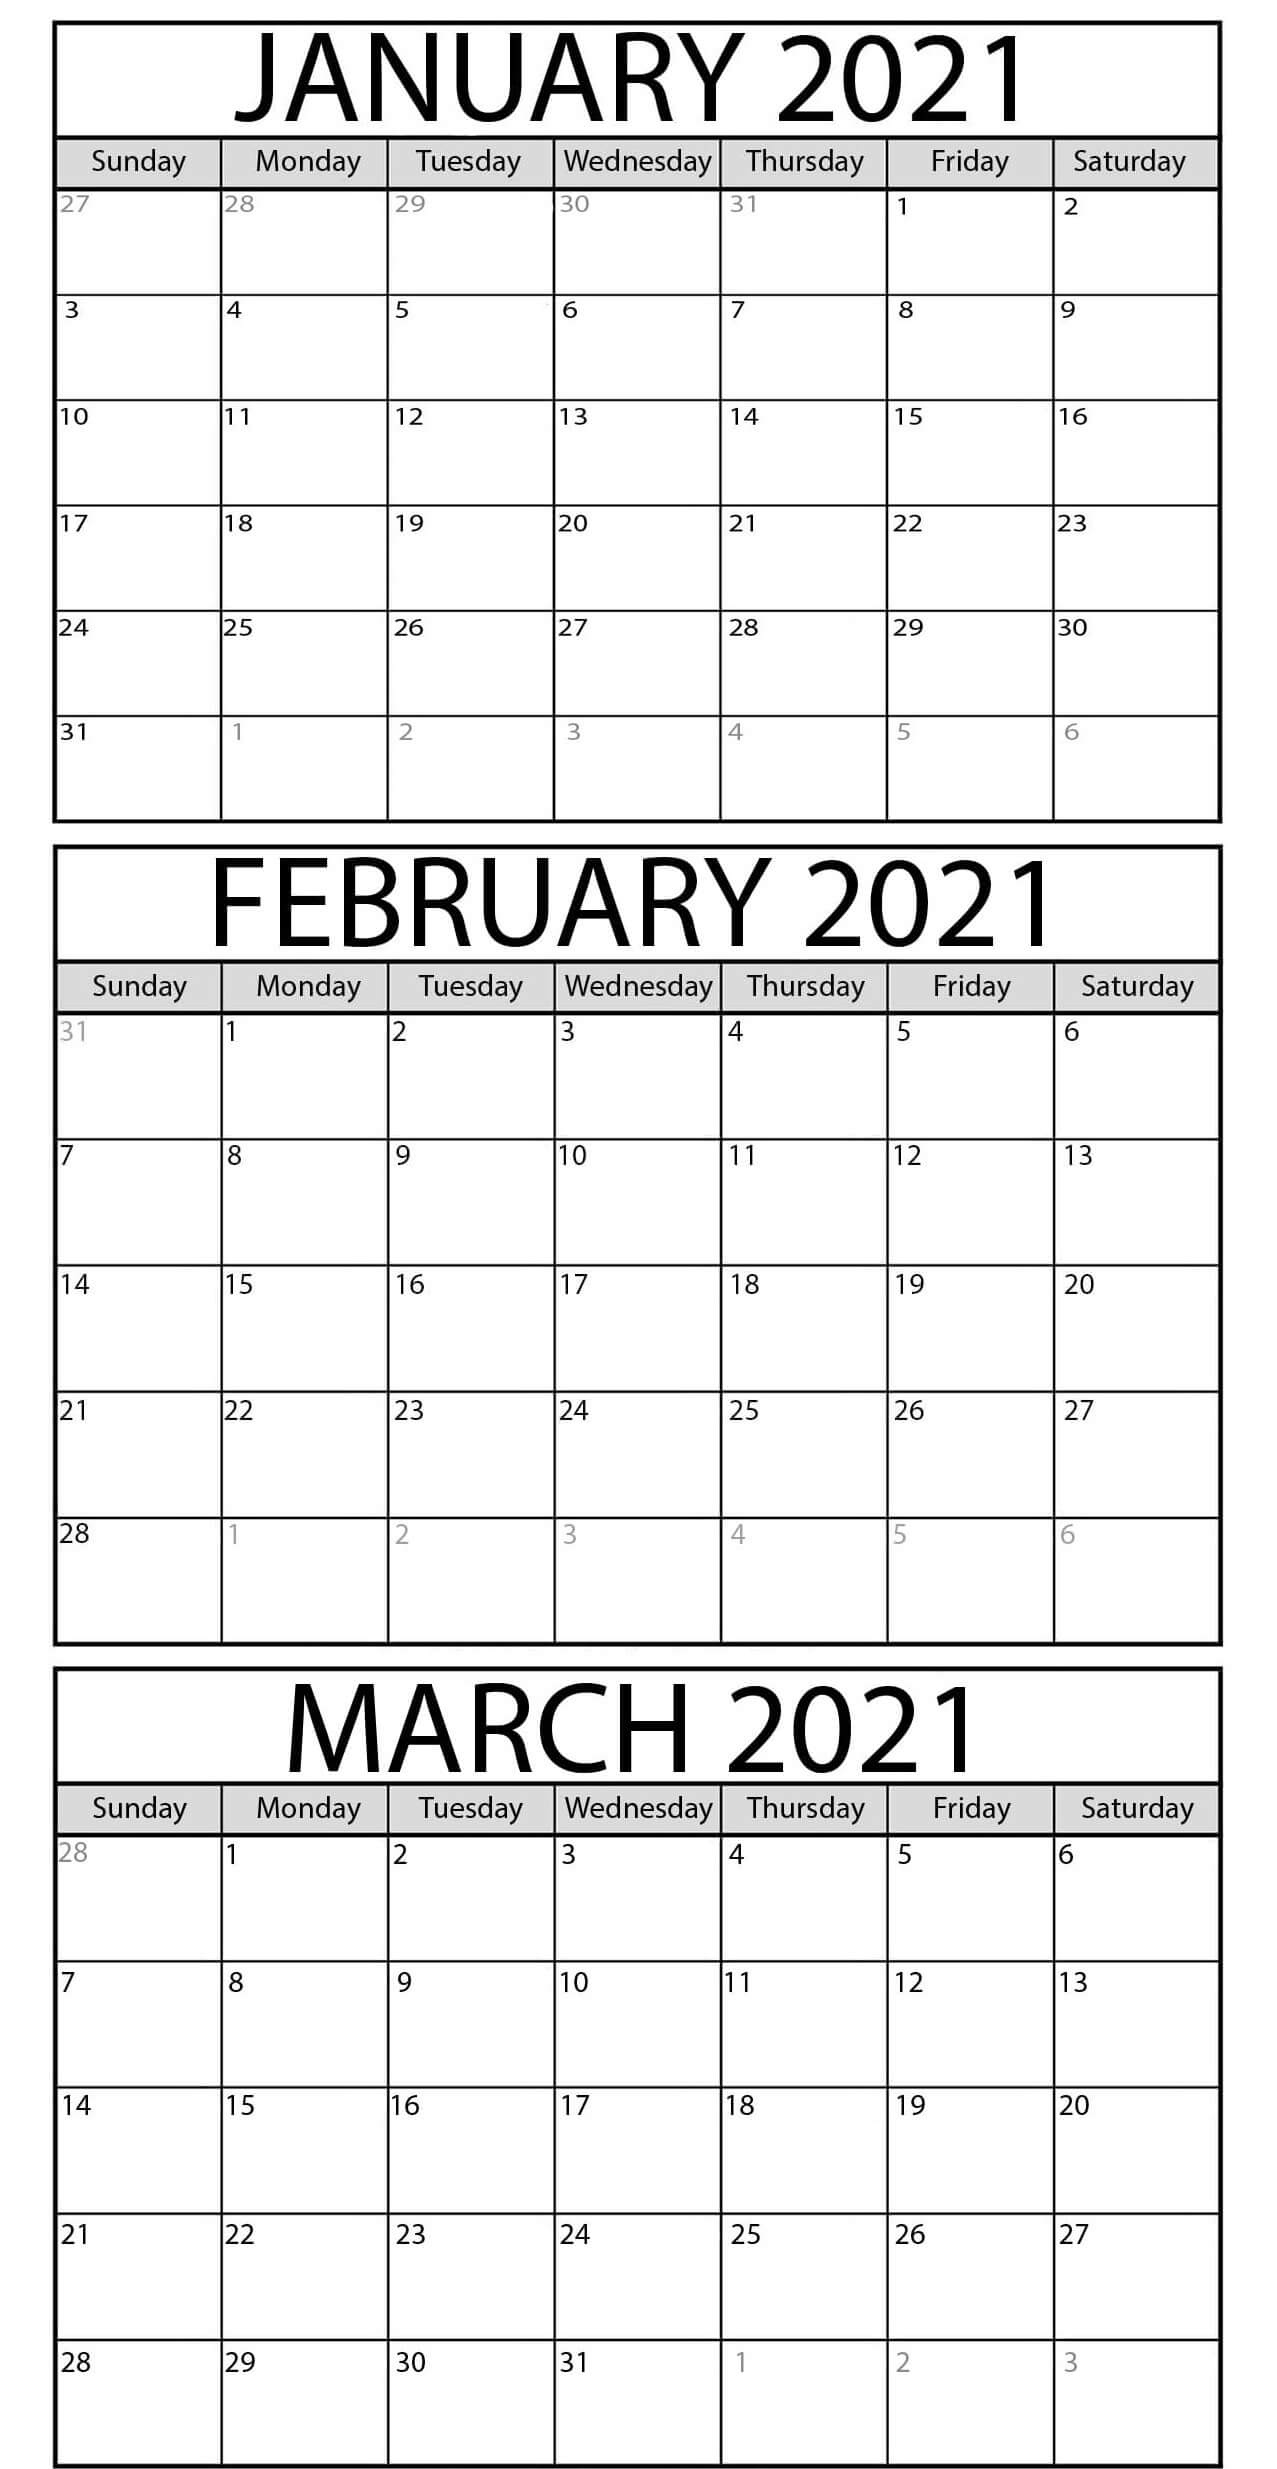 Free January To June 2021 Calendar Template With Notes - Web Galaxy Coder Free January To June June 2021 Daily Calendar